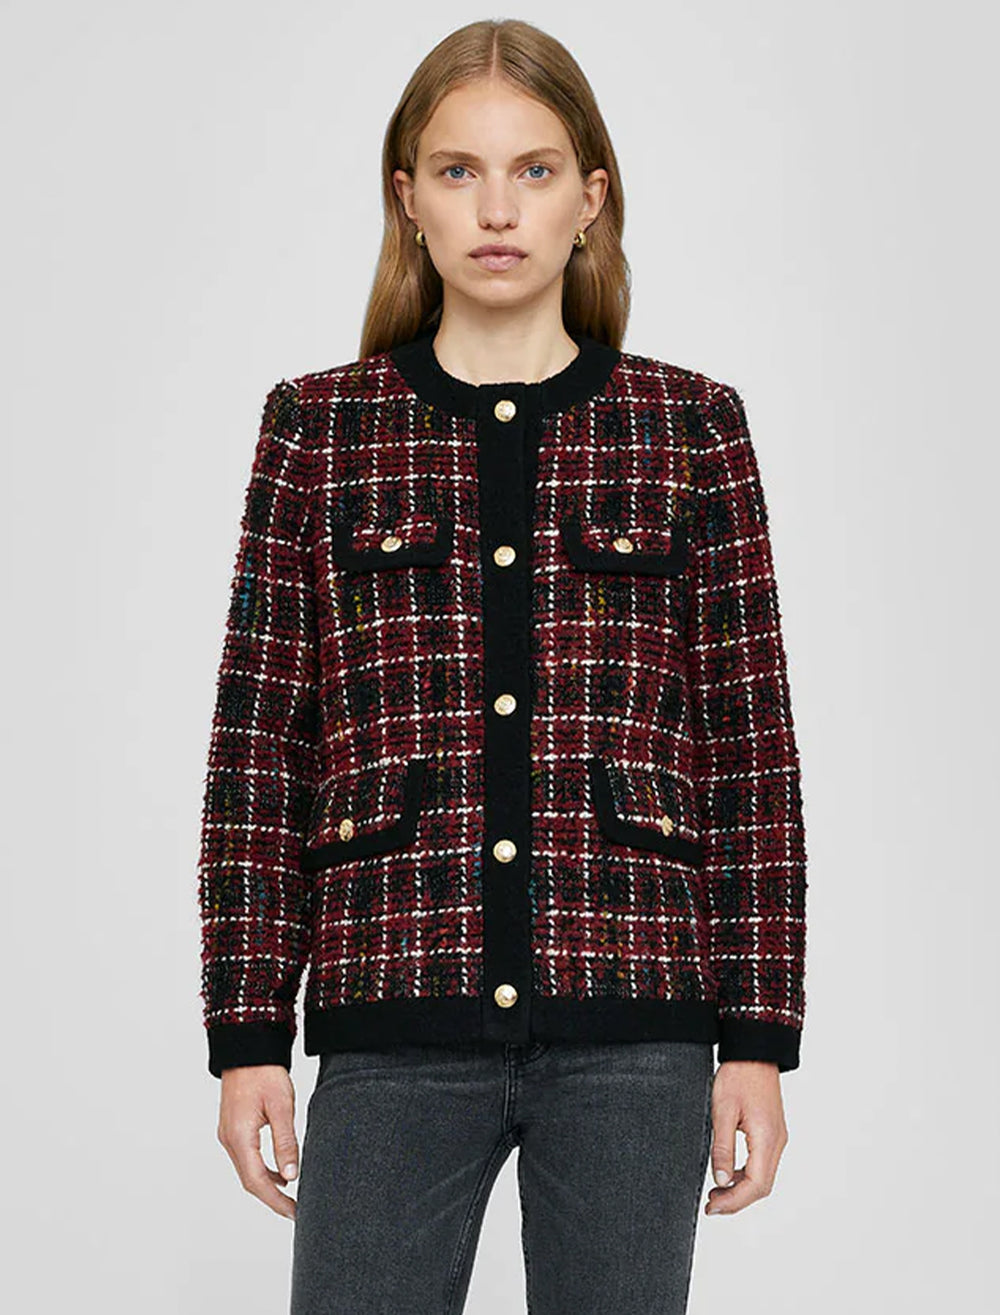 Model wearing Anine Bing's lydia jacket in cherry plaid.